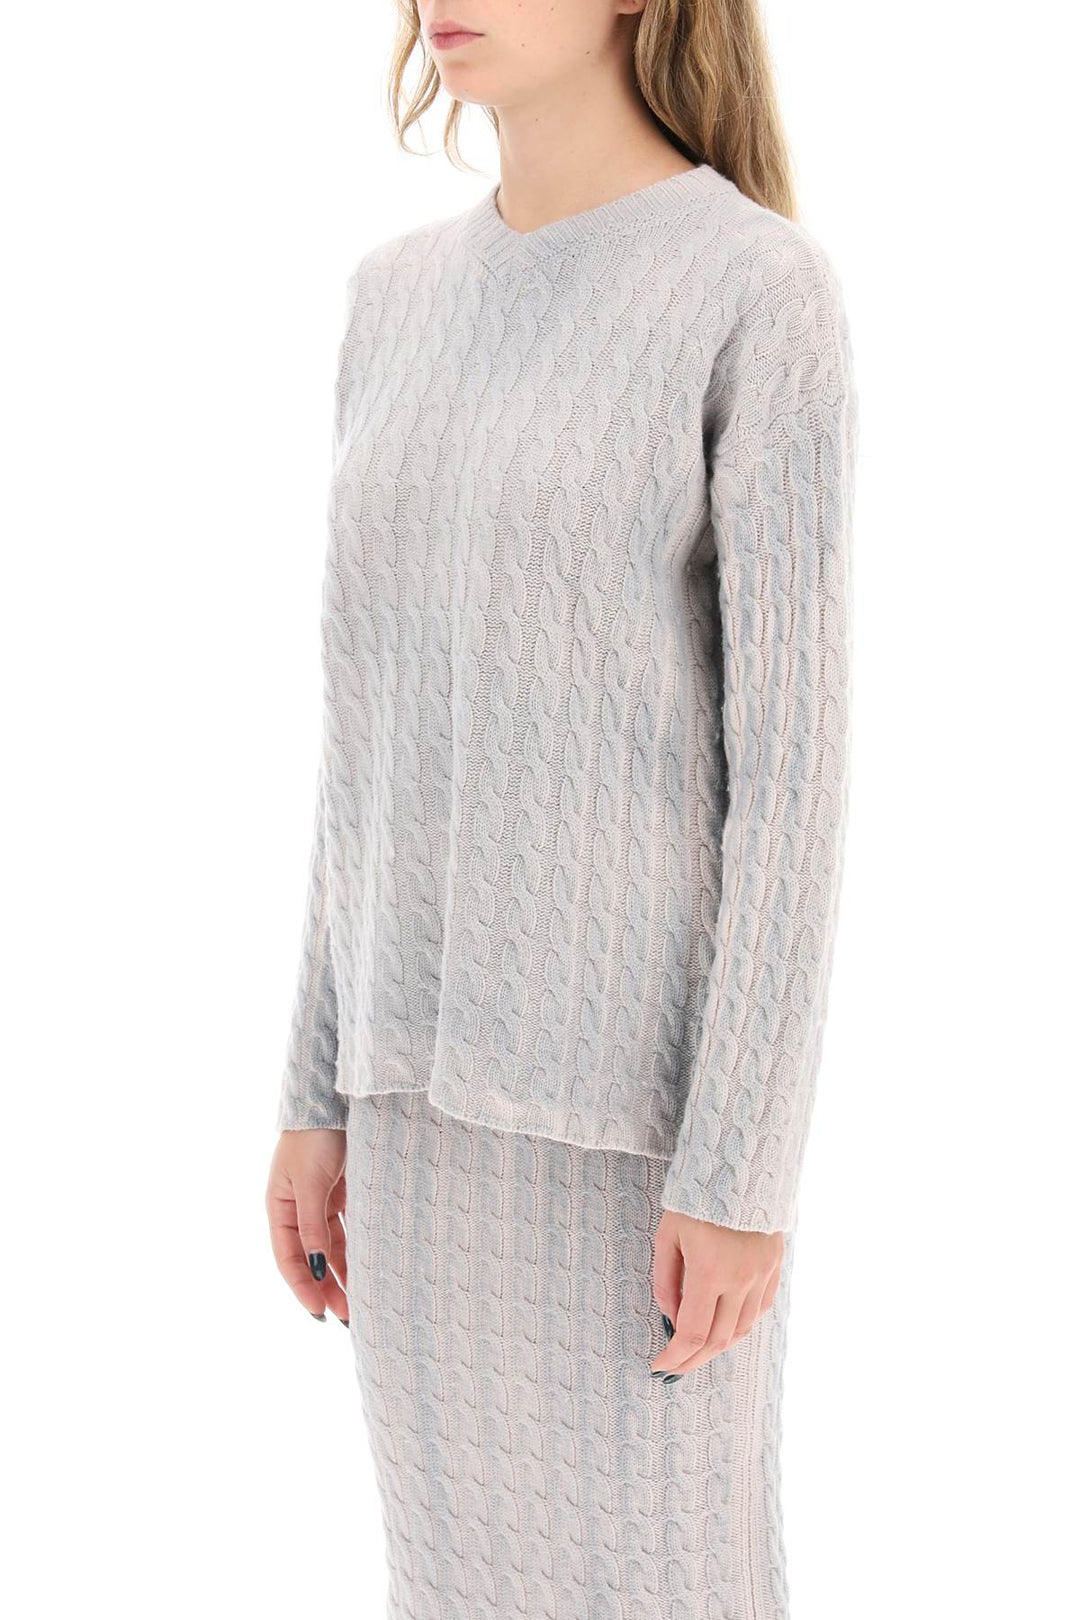 Paloma wool ainhoa cable knit sweater-3